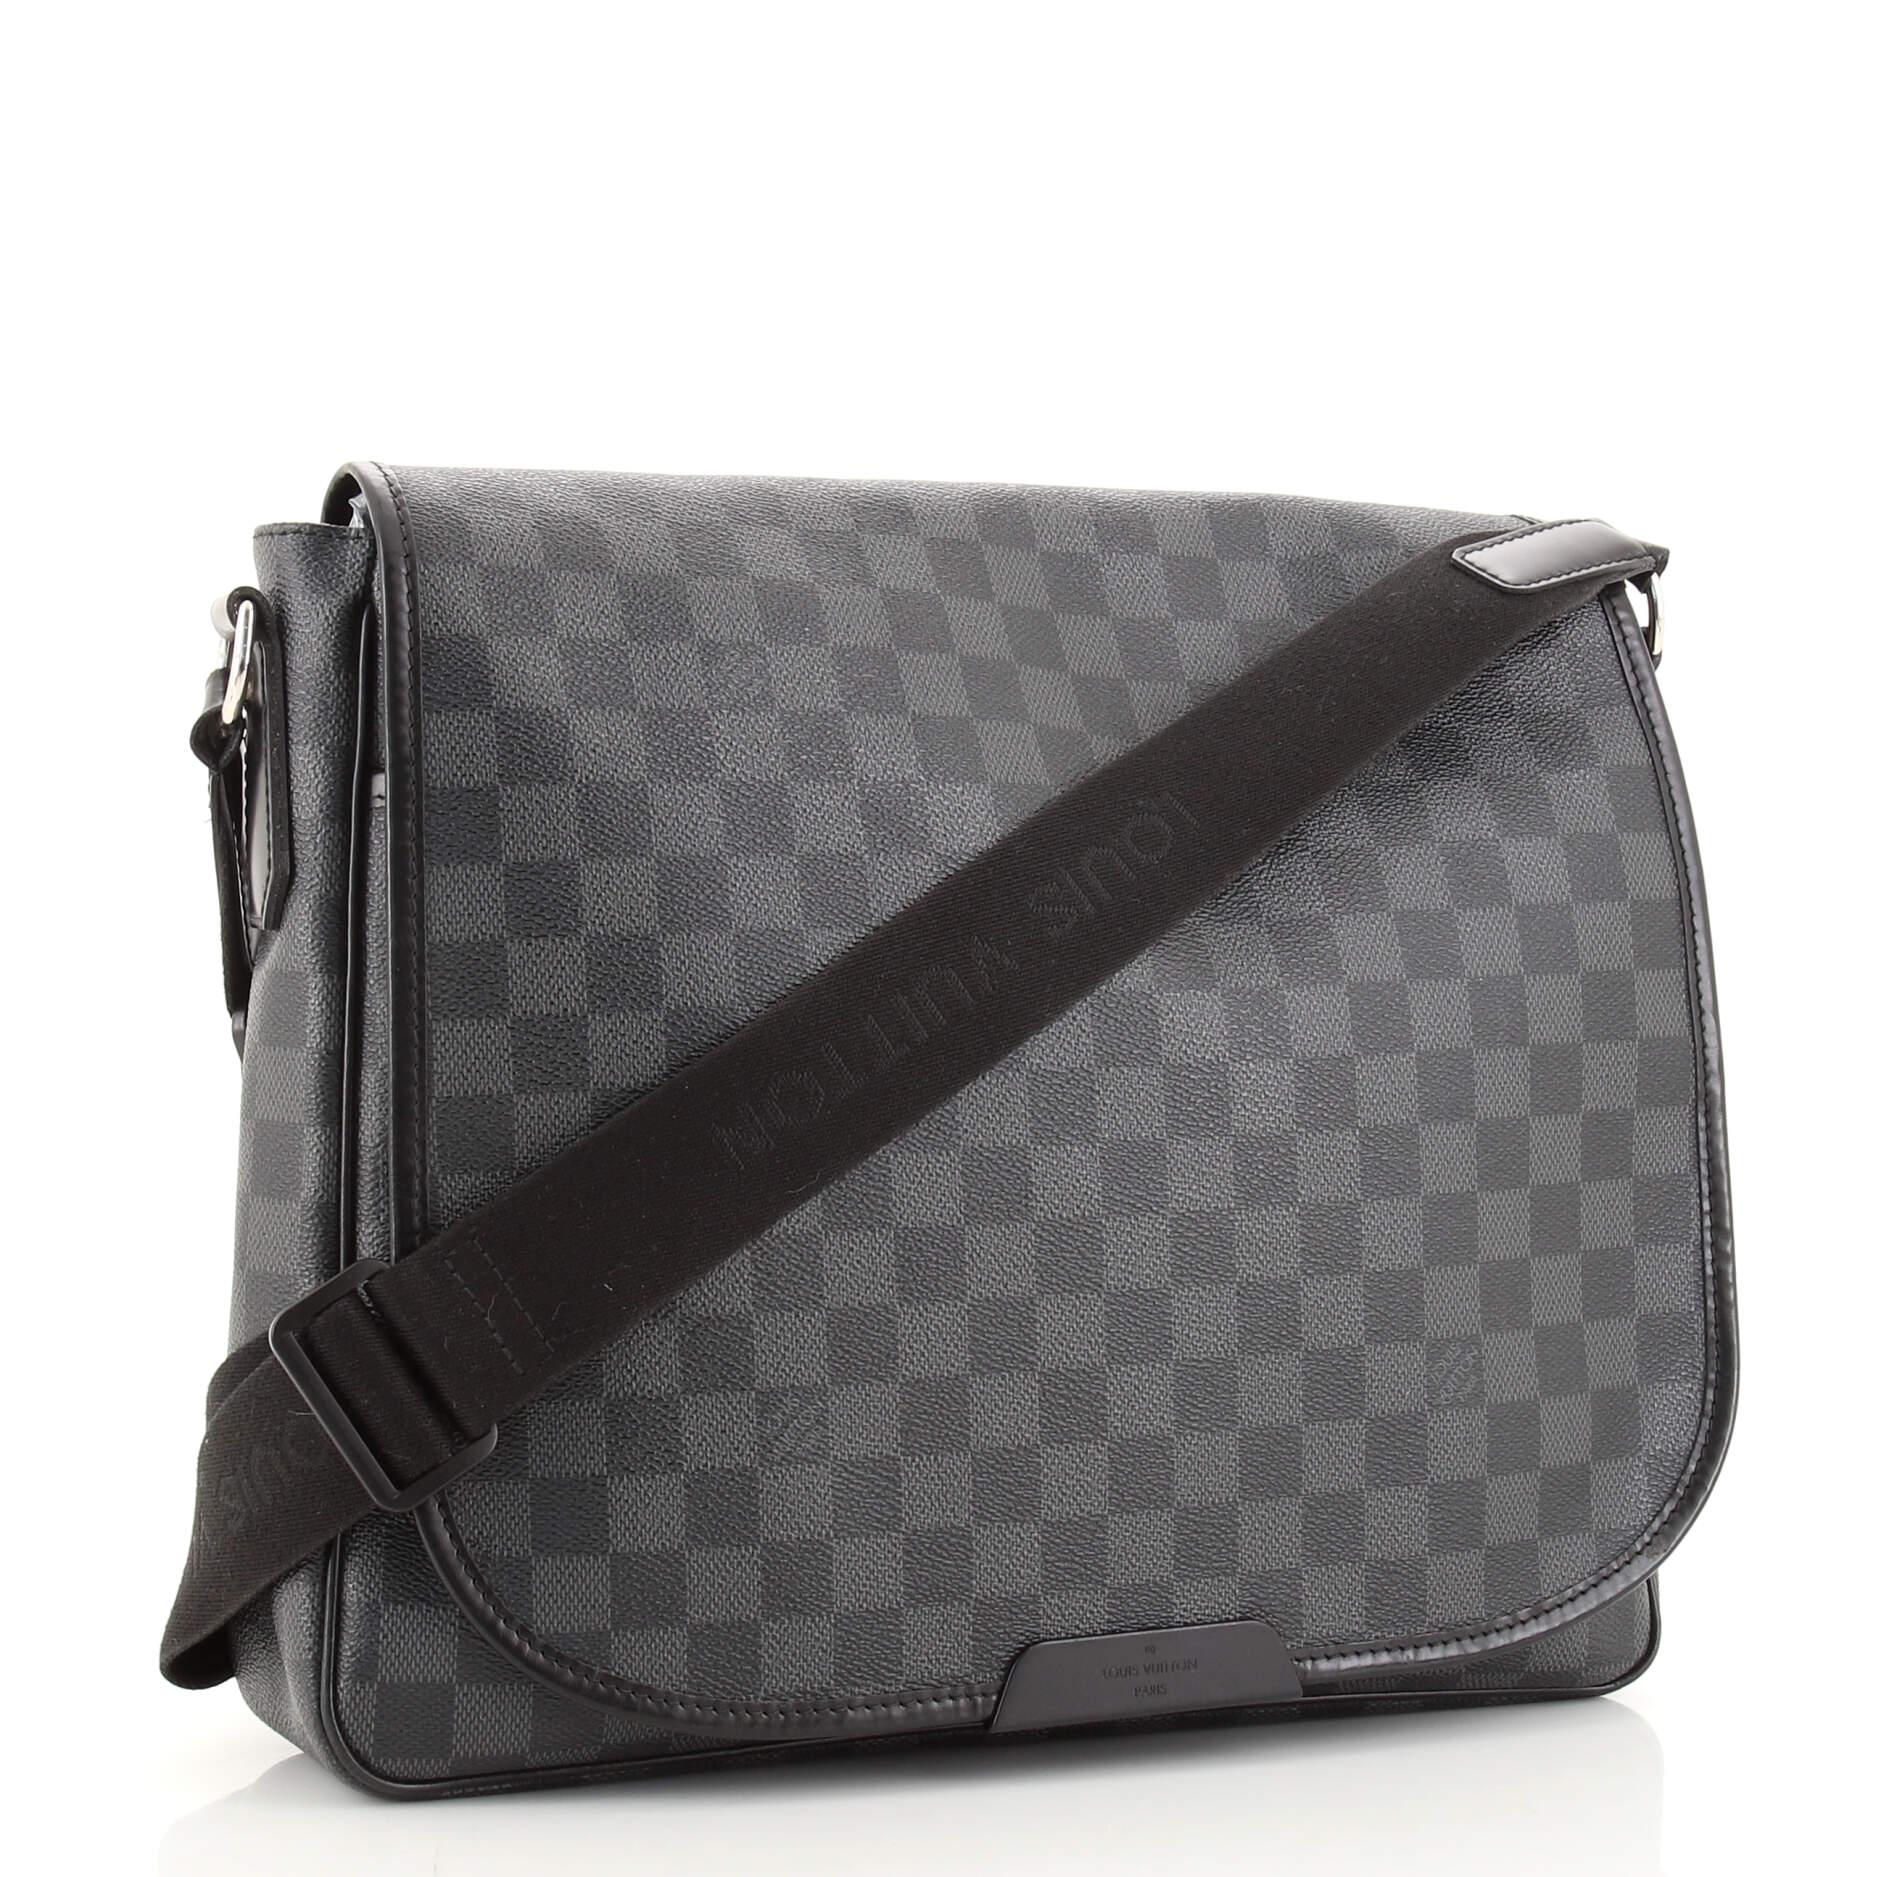 Daniel mm satchel leather satchel Louis Vuitton Grey in Leather